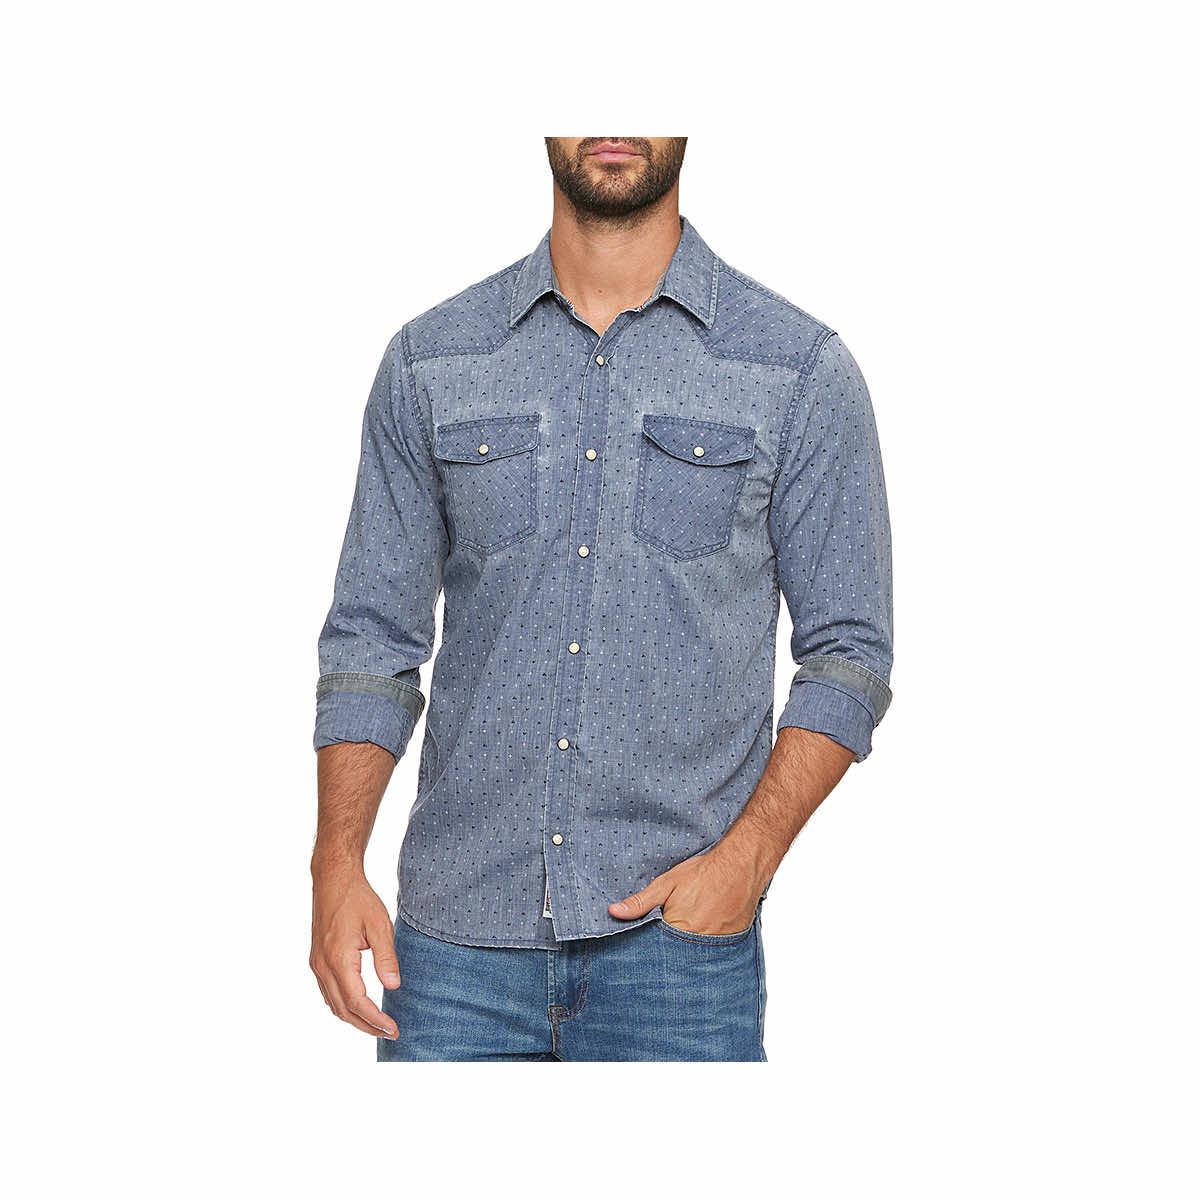  Men's Mena Dot Print Vintage Soft Western Long Sleeve Shirt